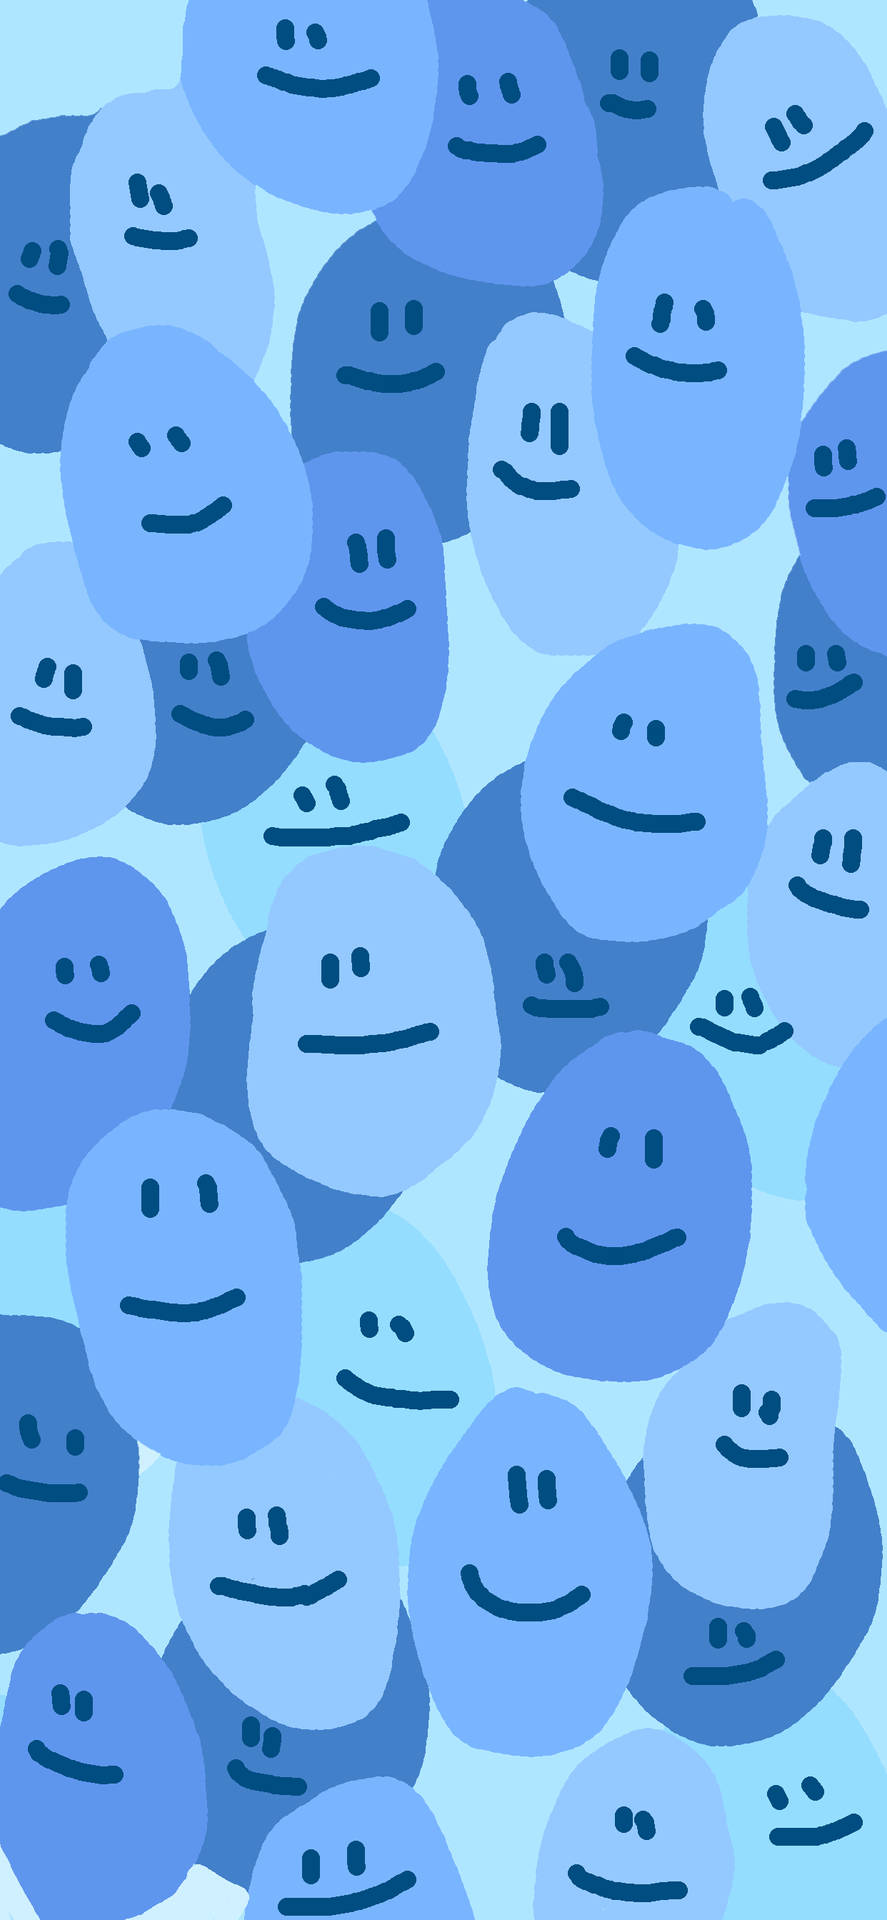 Preppy Smiley Face Blue Oblongs Wallpaper